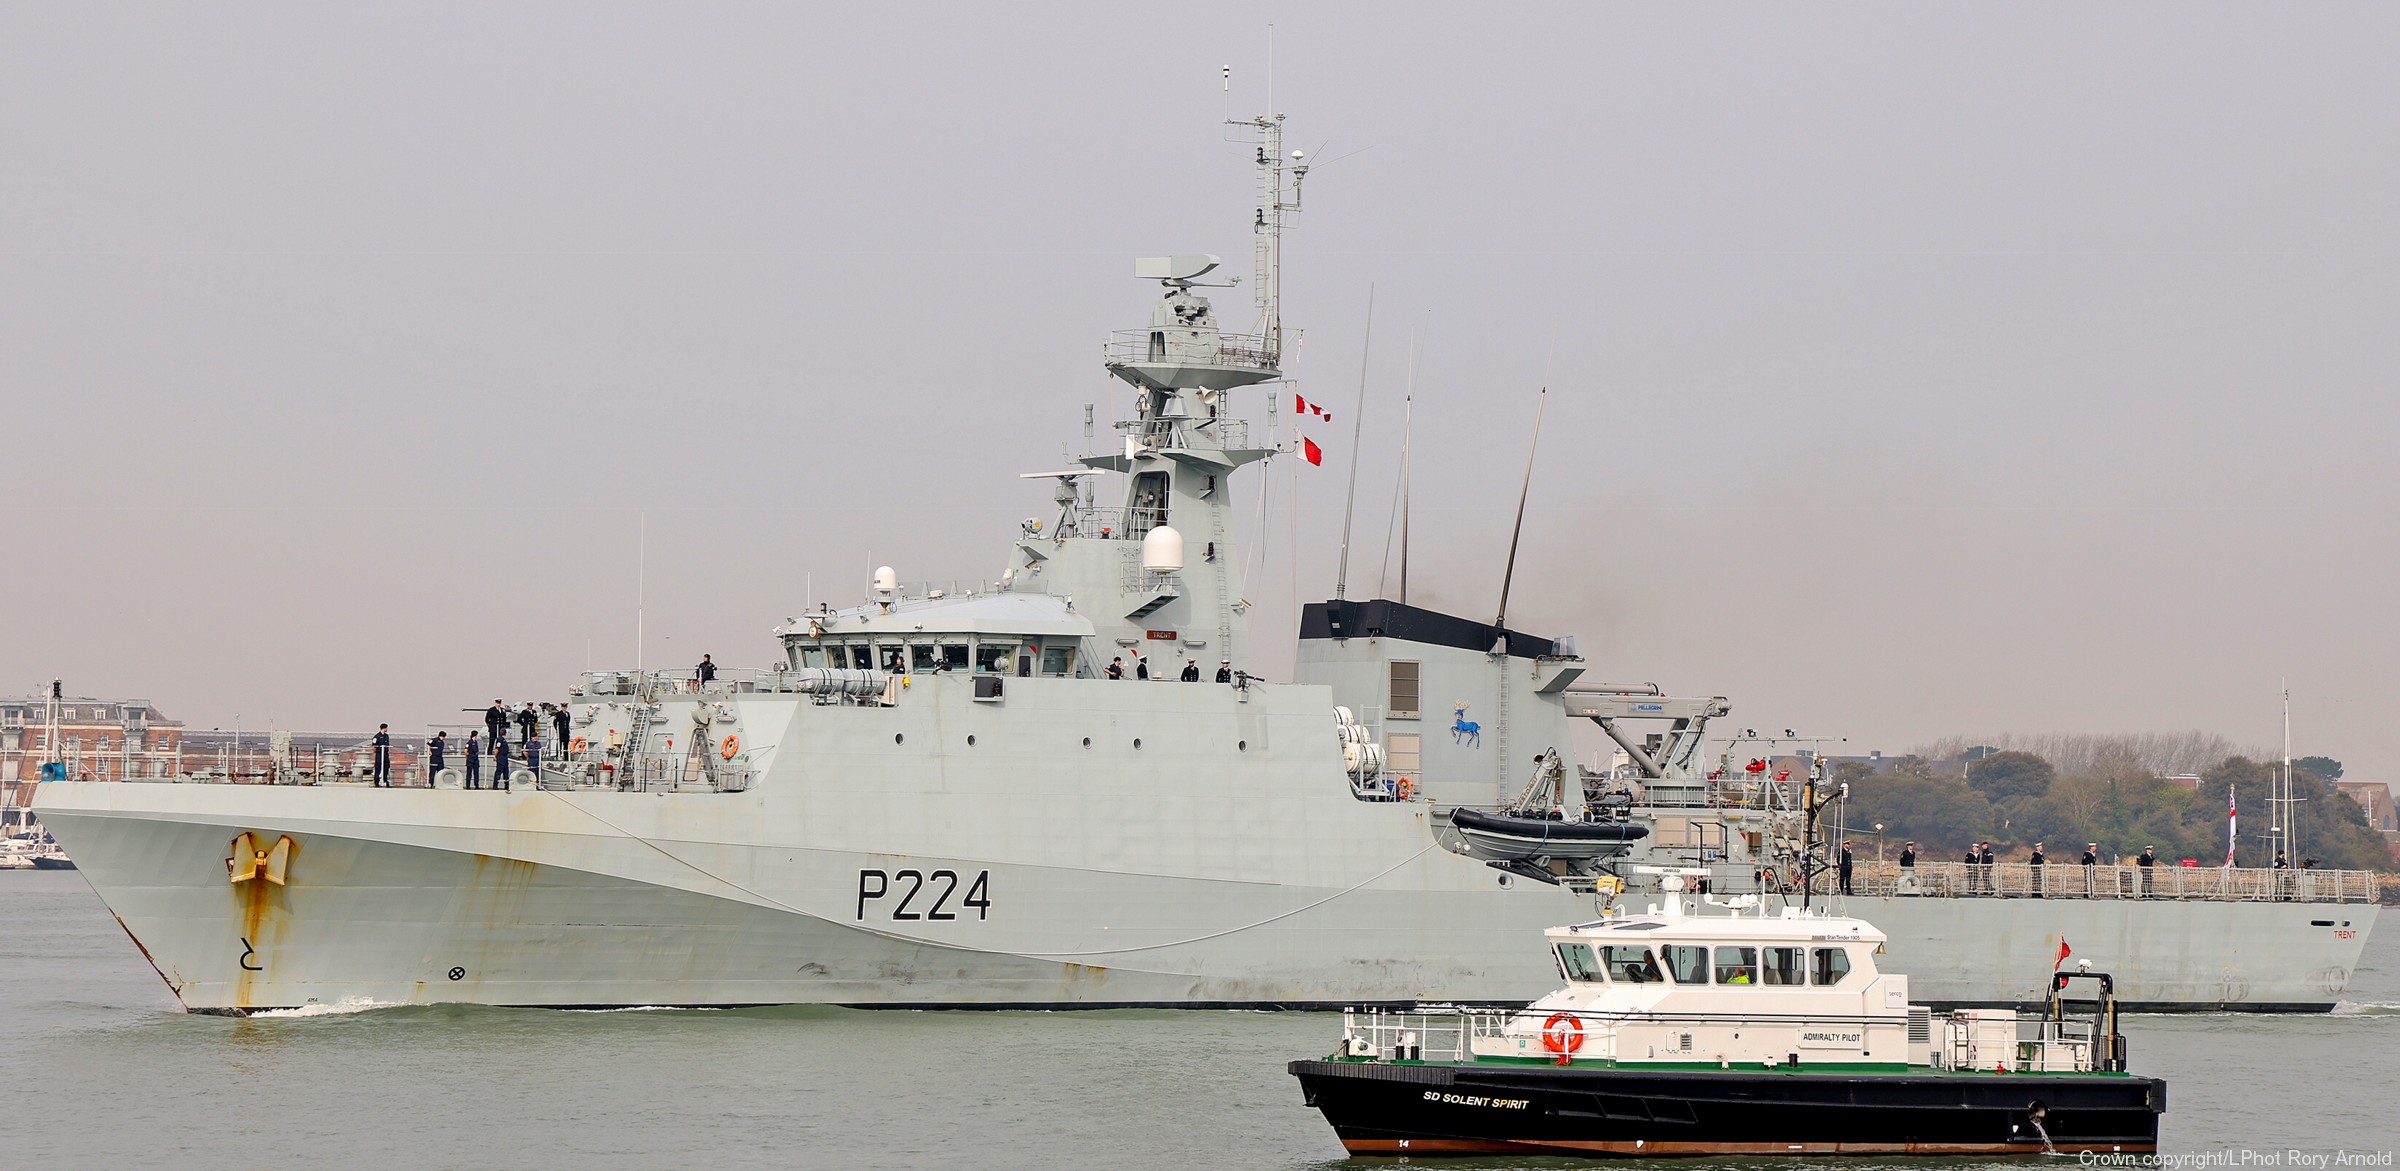 p224 hms trent river class offshore patrol vessel opv royal navy 43